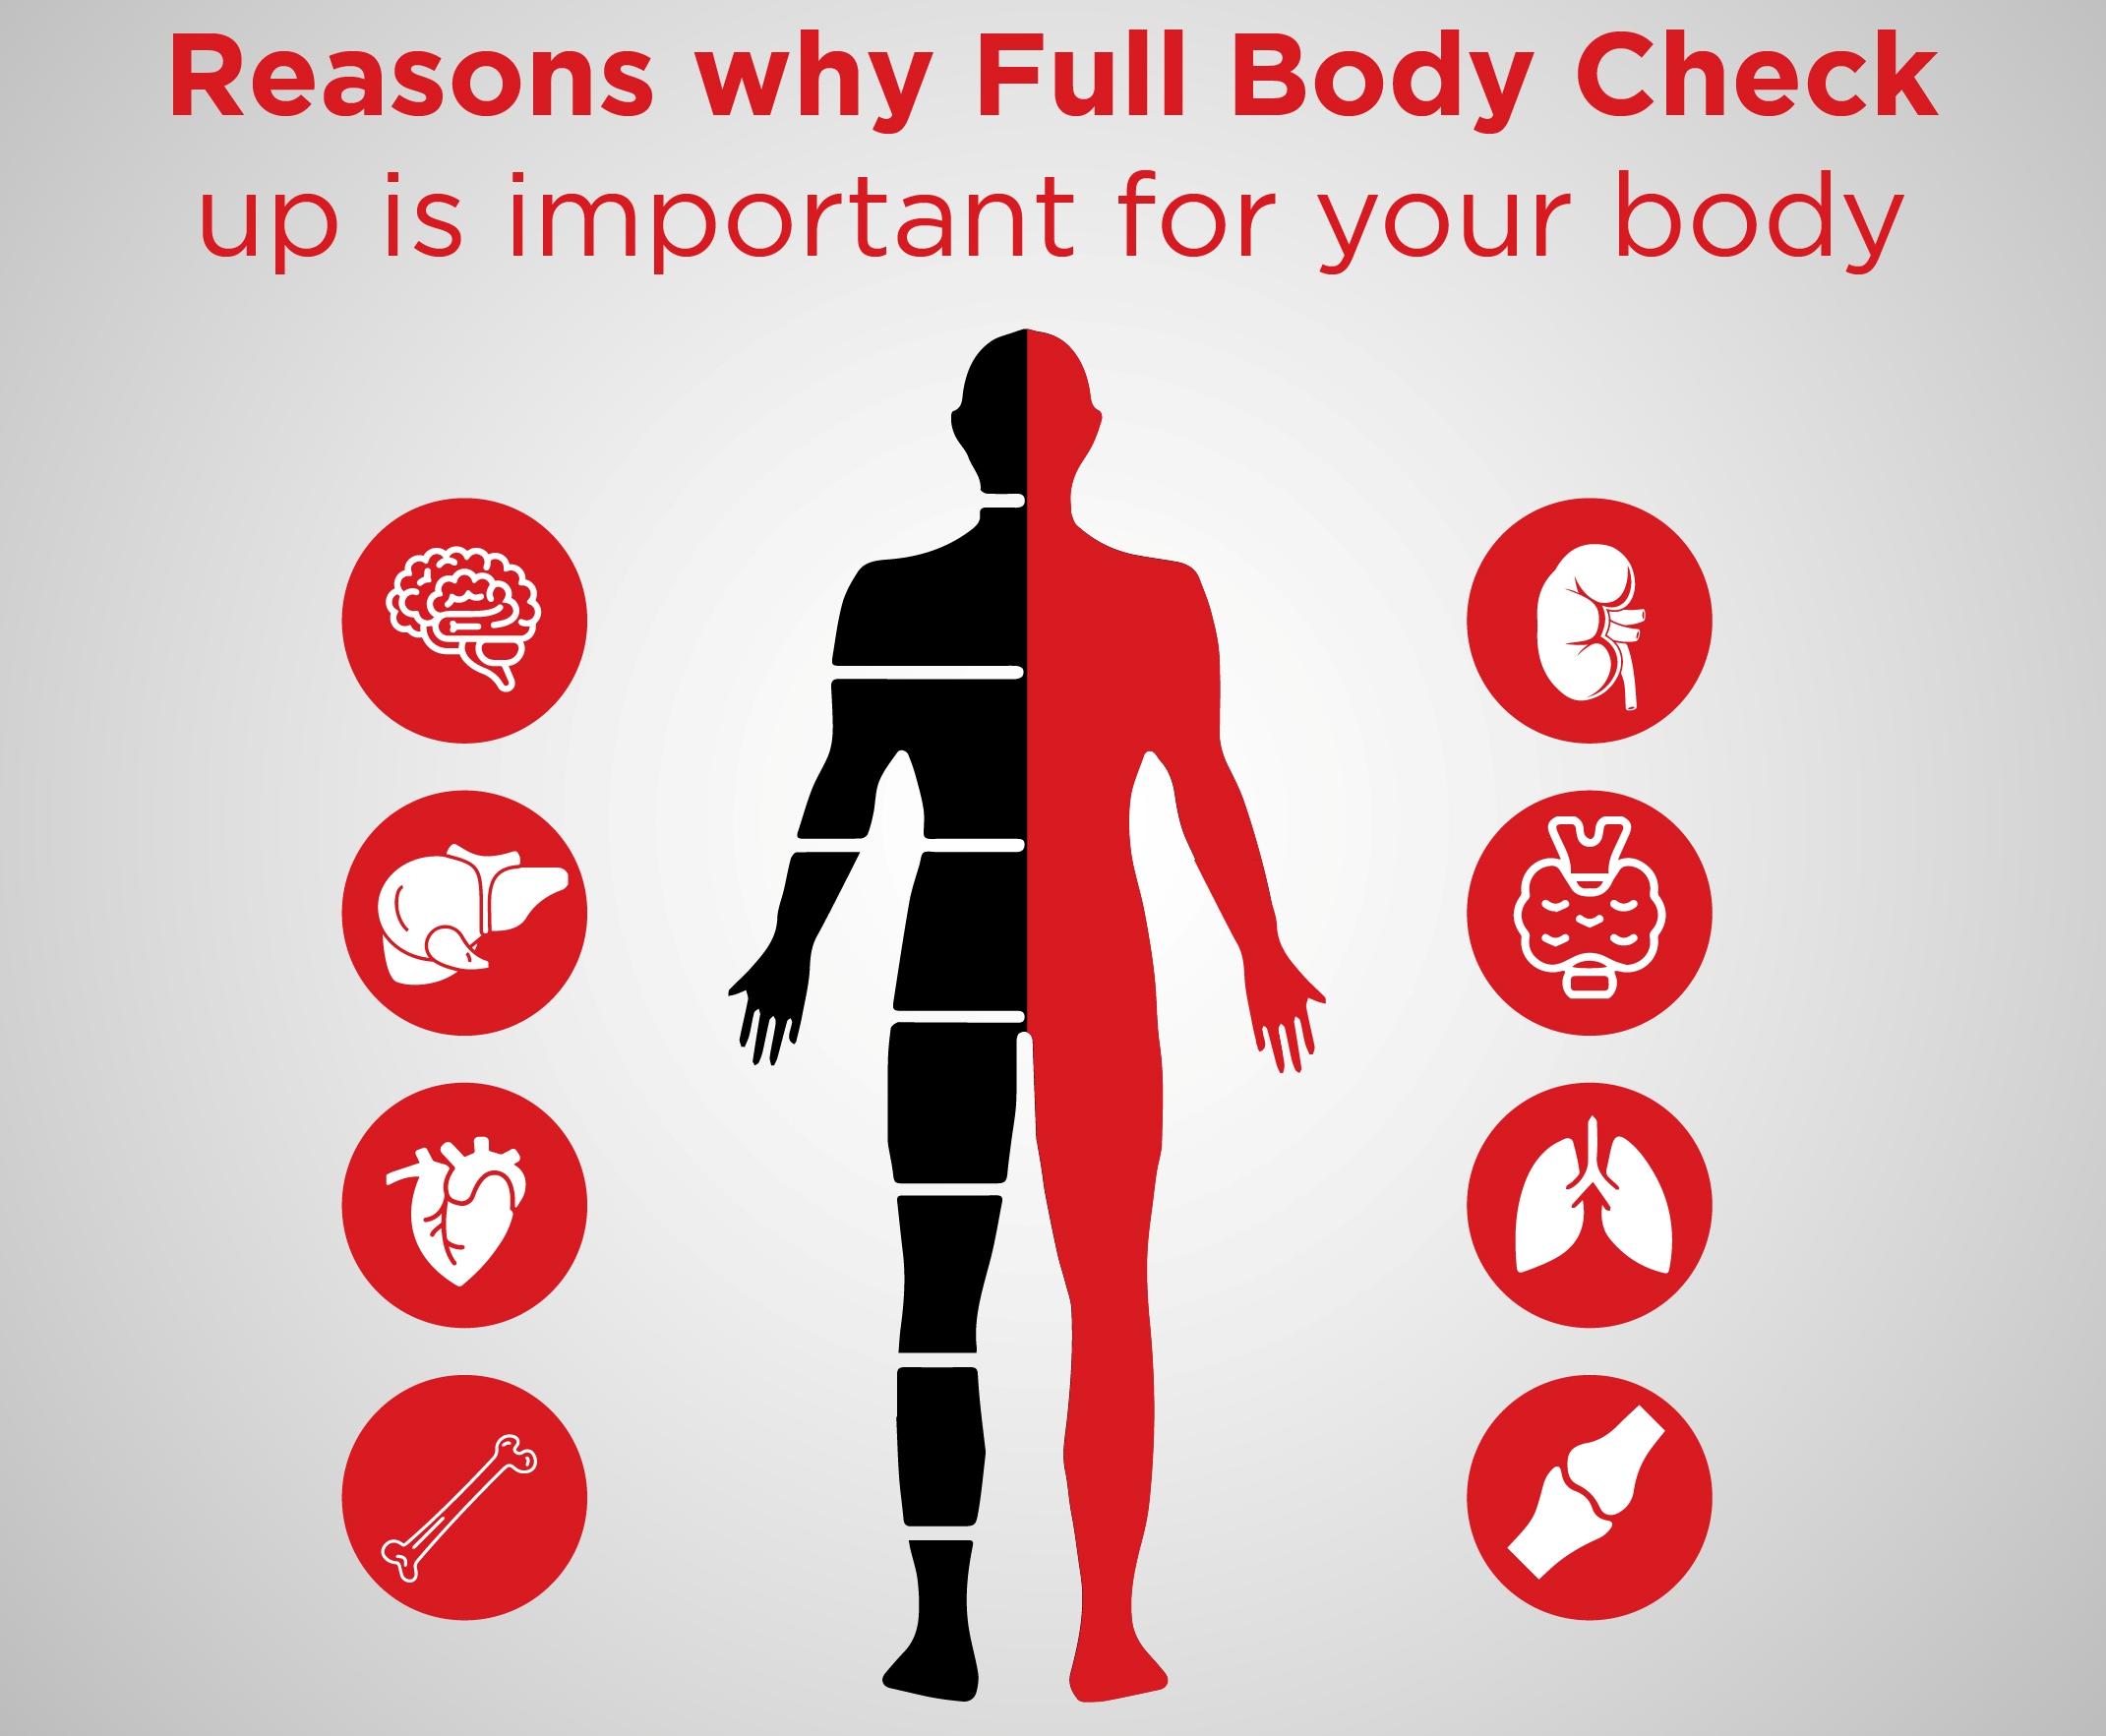 Importance of Regular Full Body Check-ups
